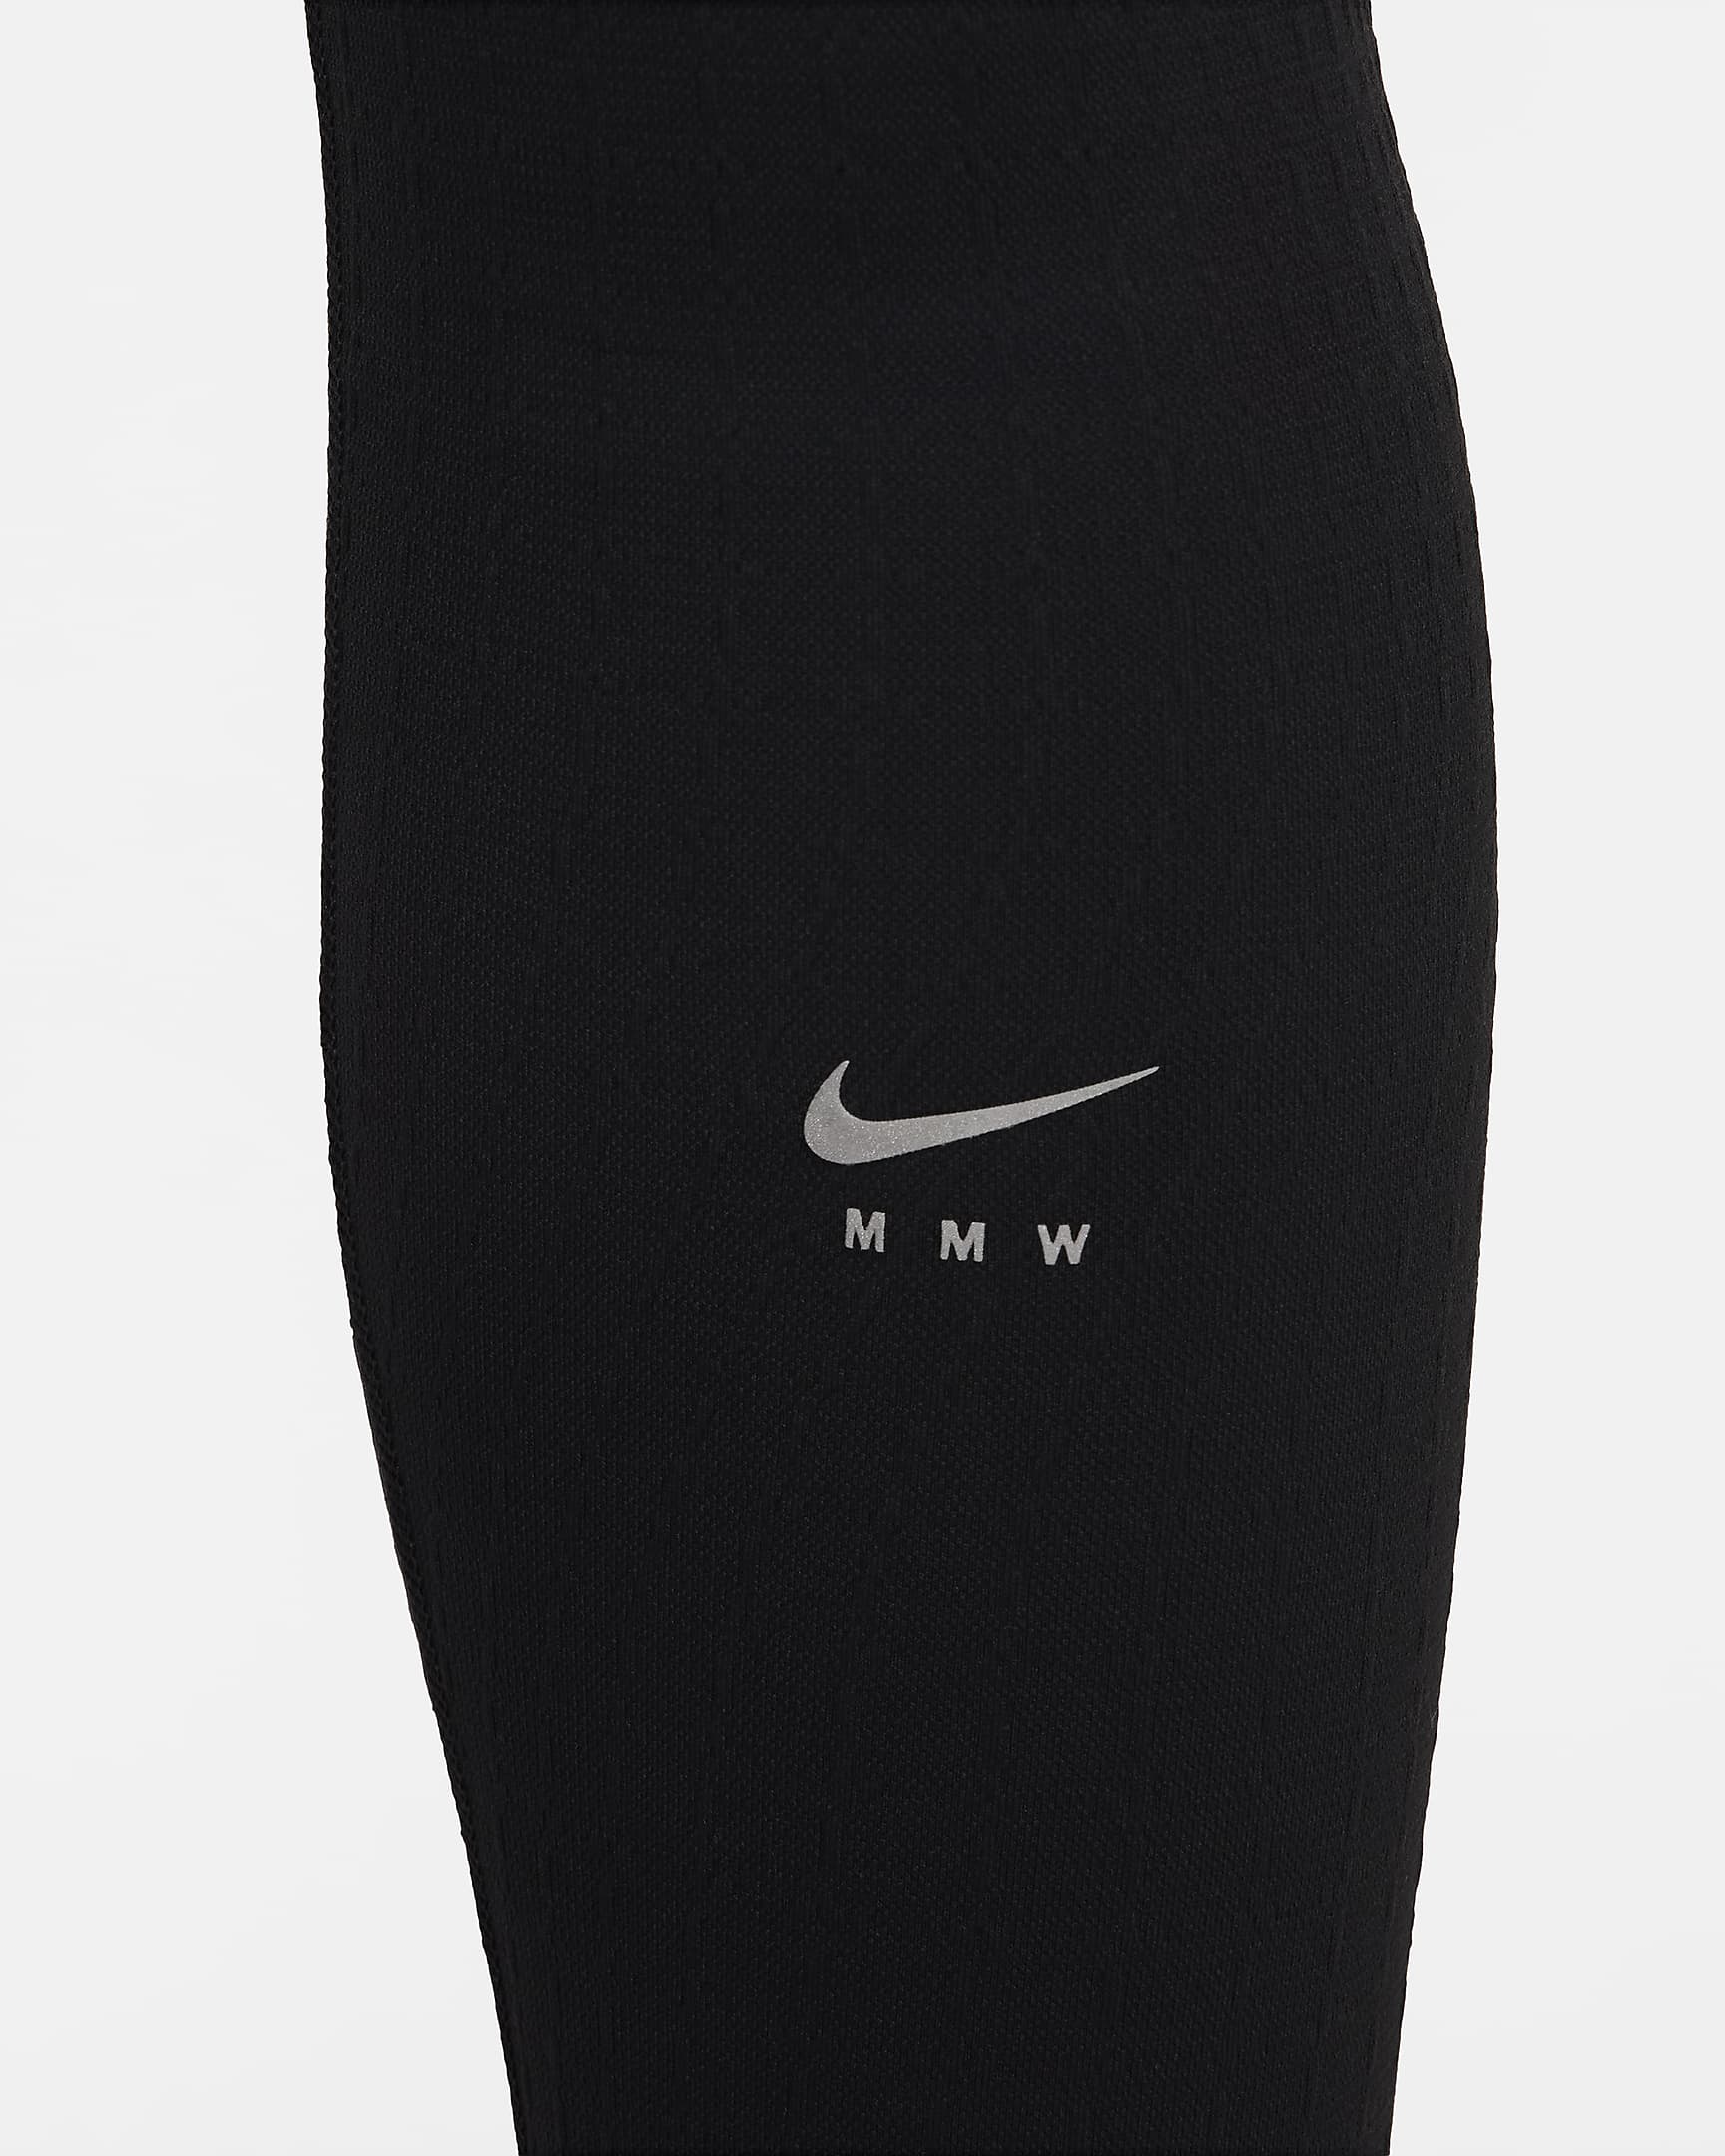 Nike x MMW Women's Leggings - Black